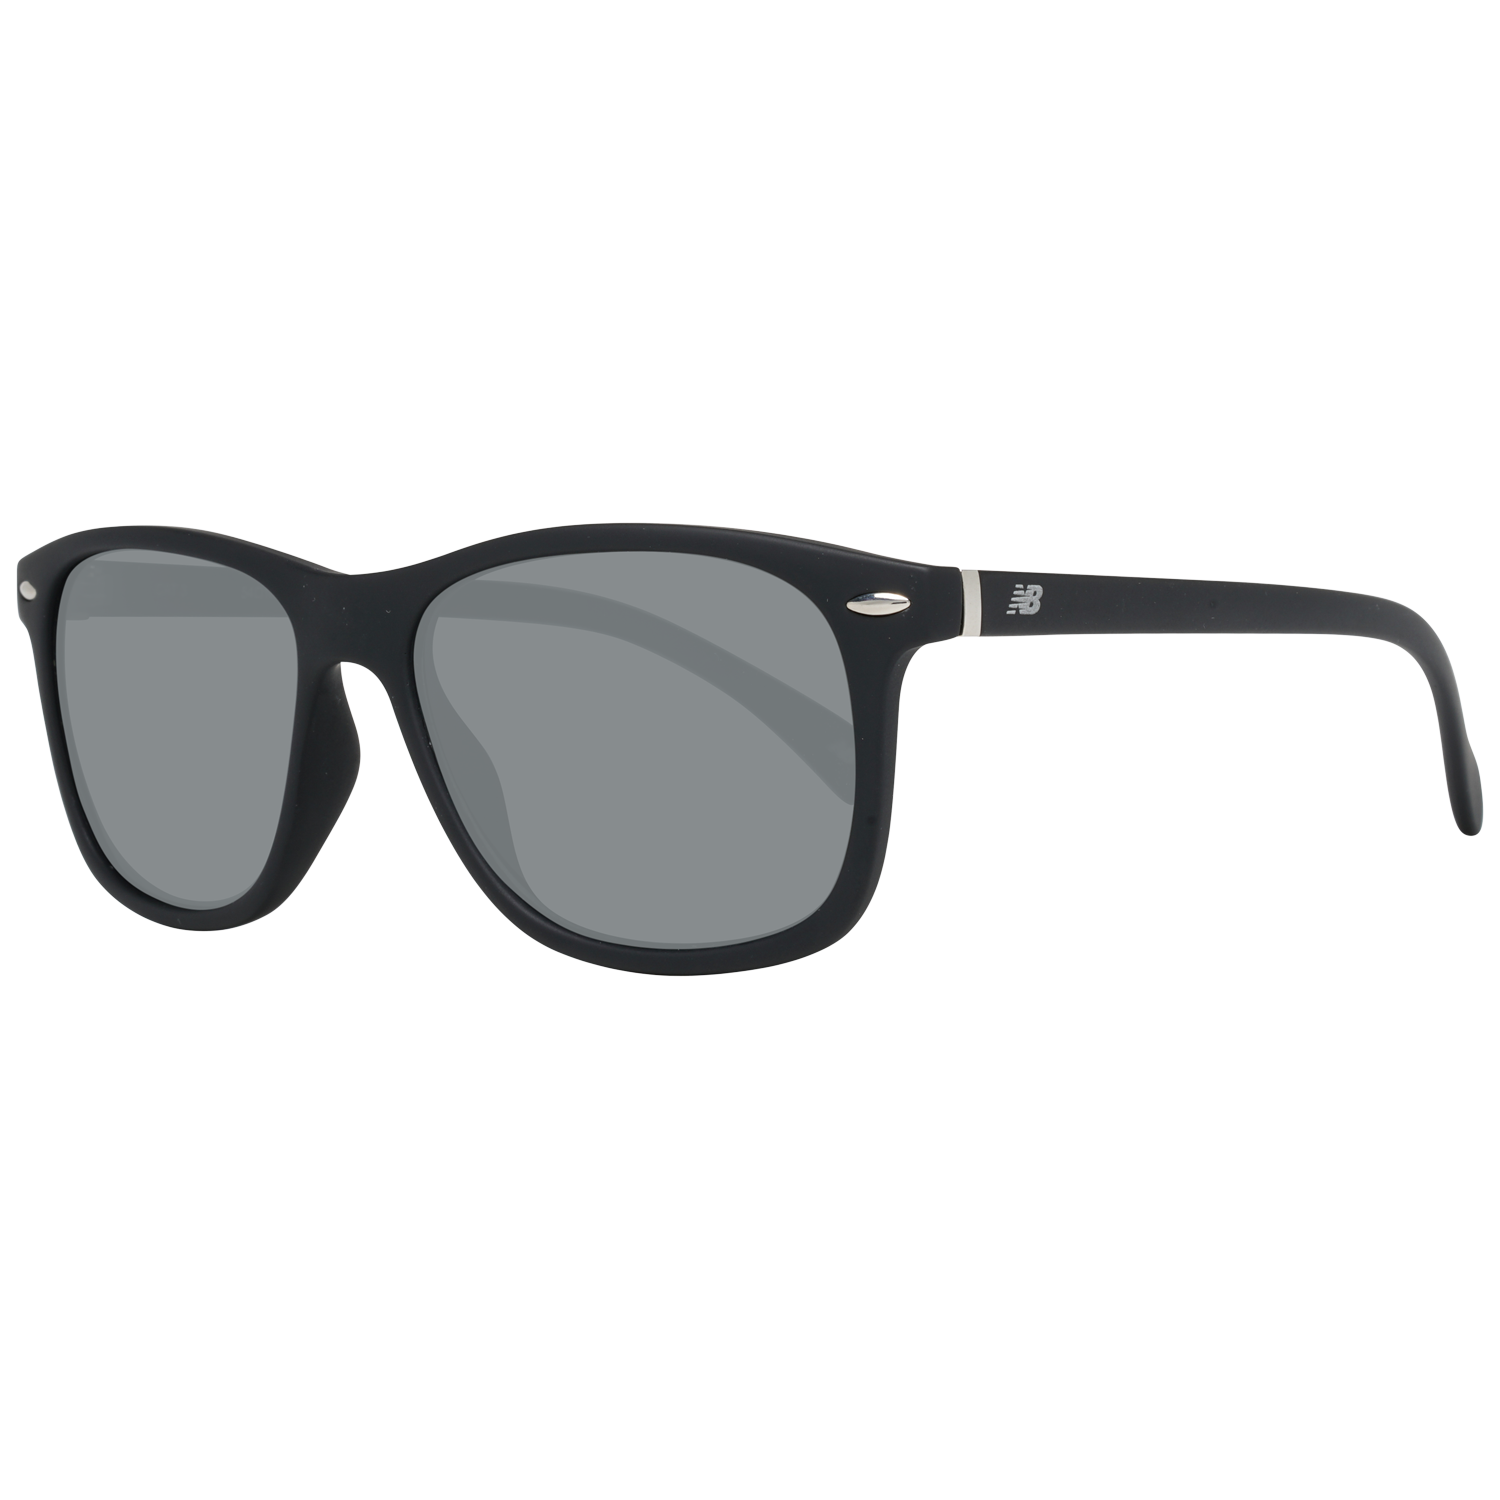 New Balance Sunglasses NB6280 C01 54 Black